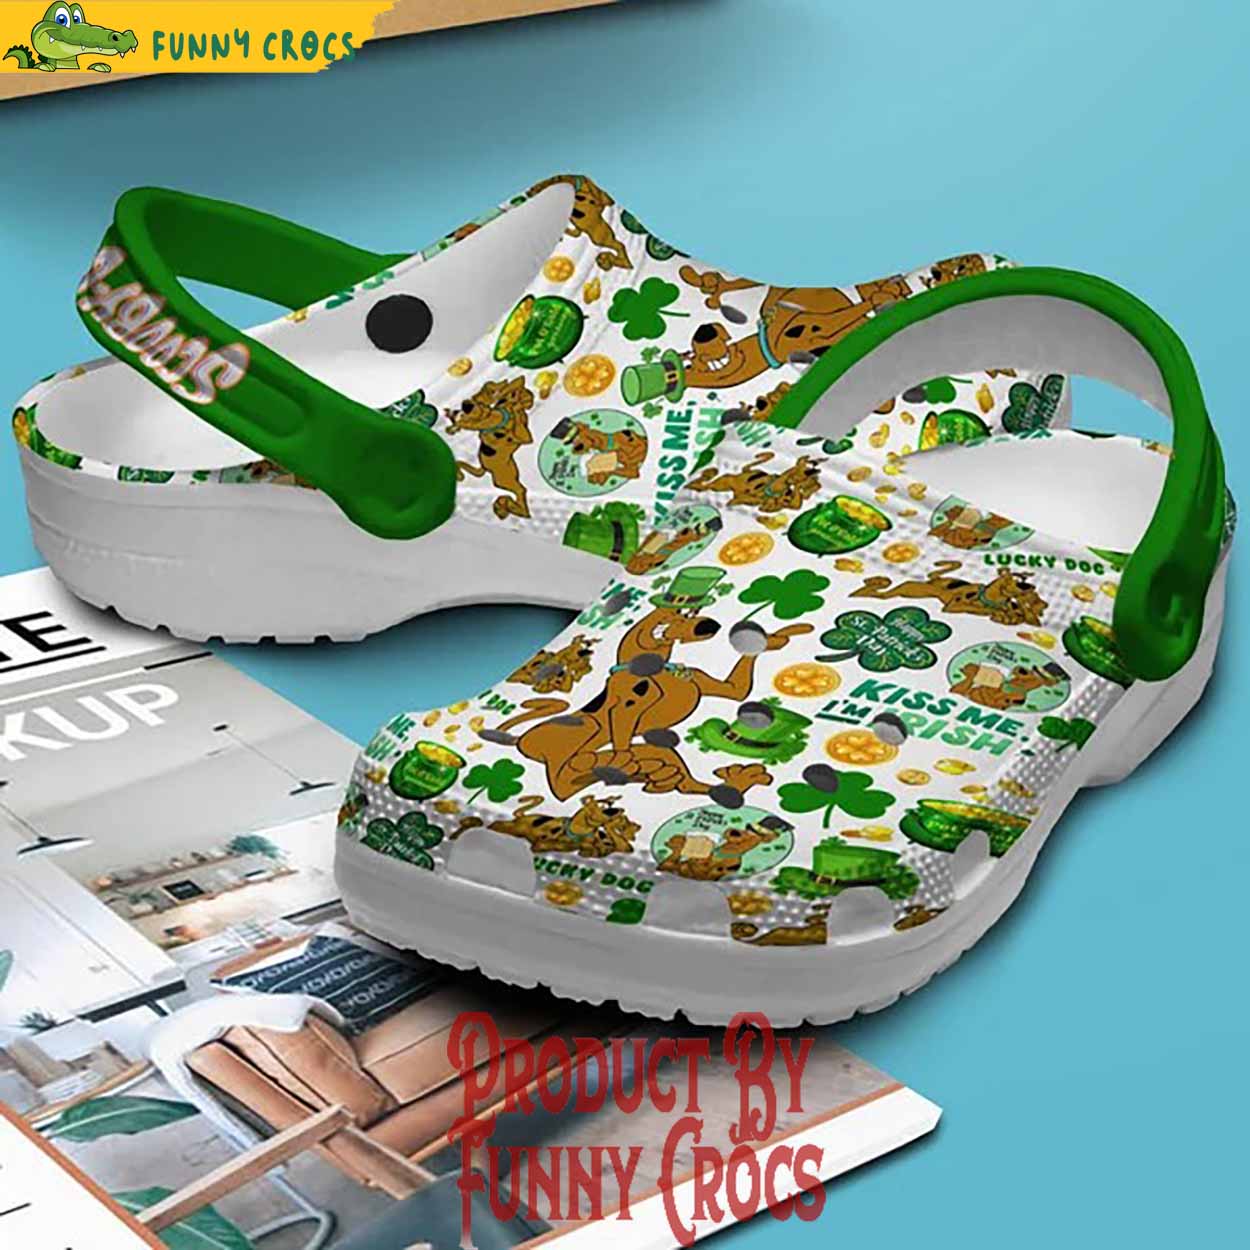 Scooby Doo Happy St.Patrick's Day Crocs